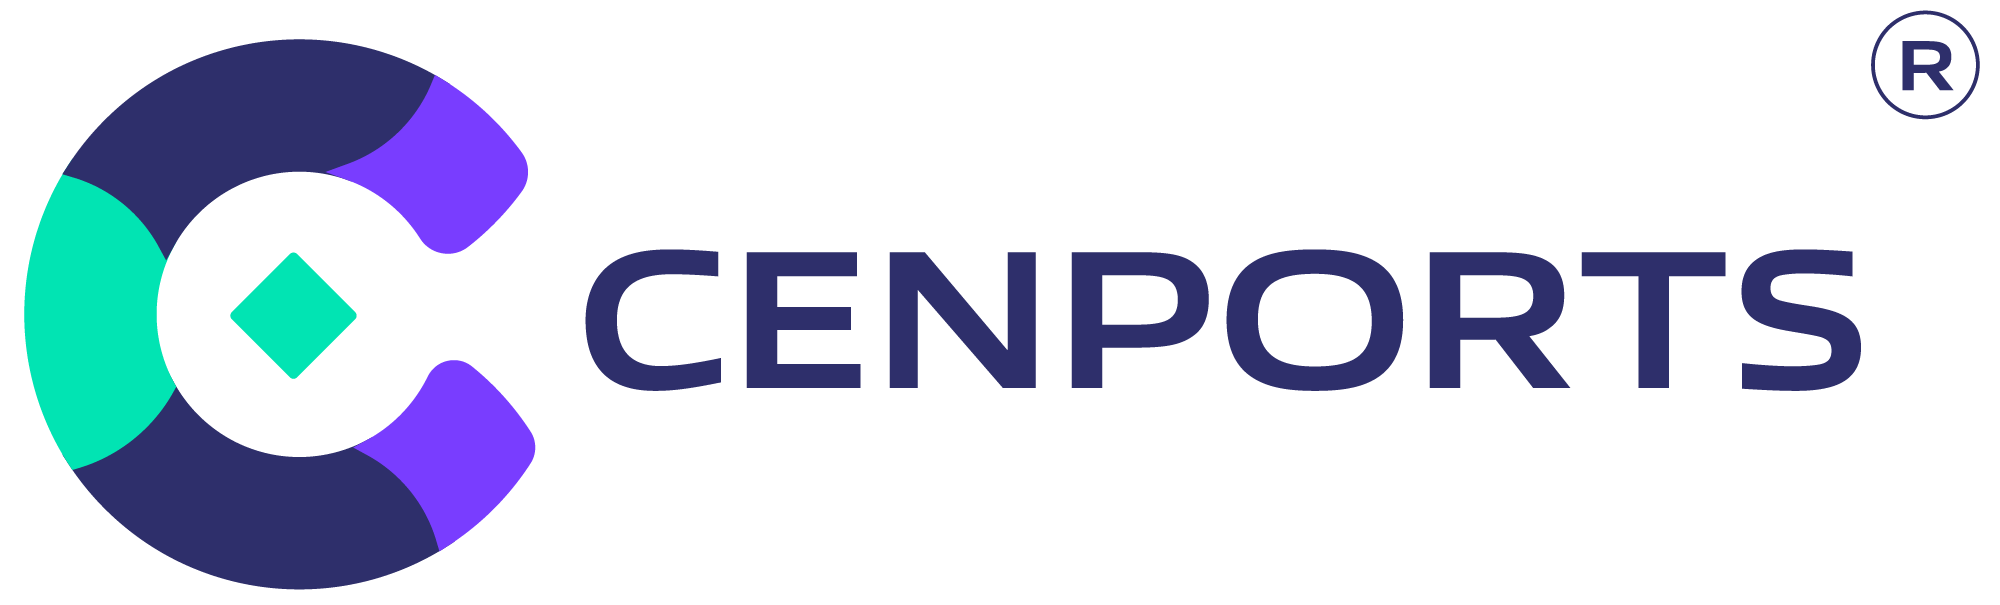 Cenports Logistics